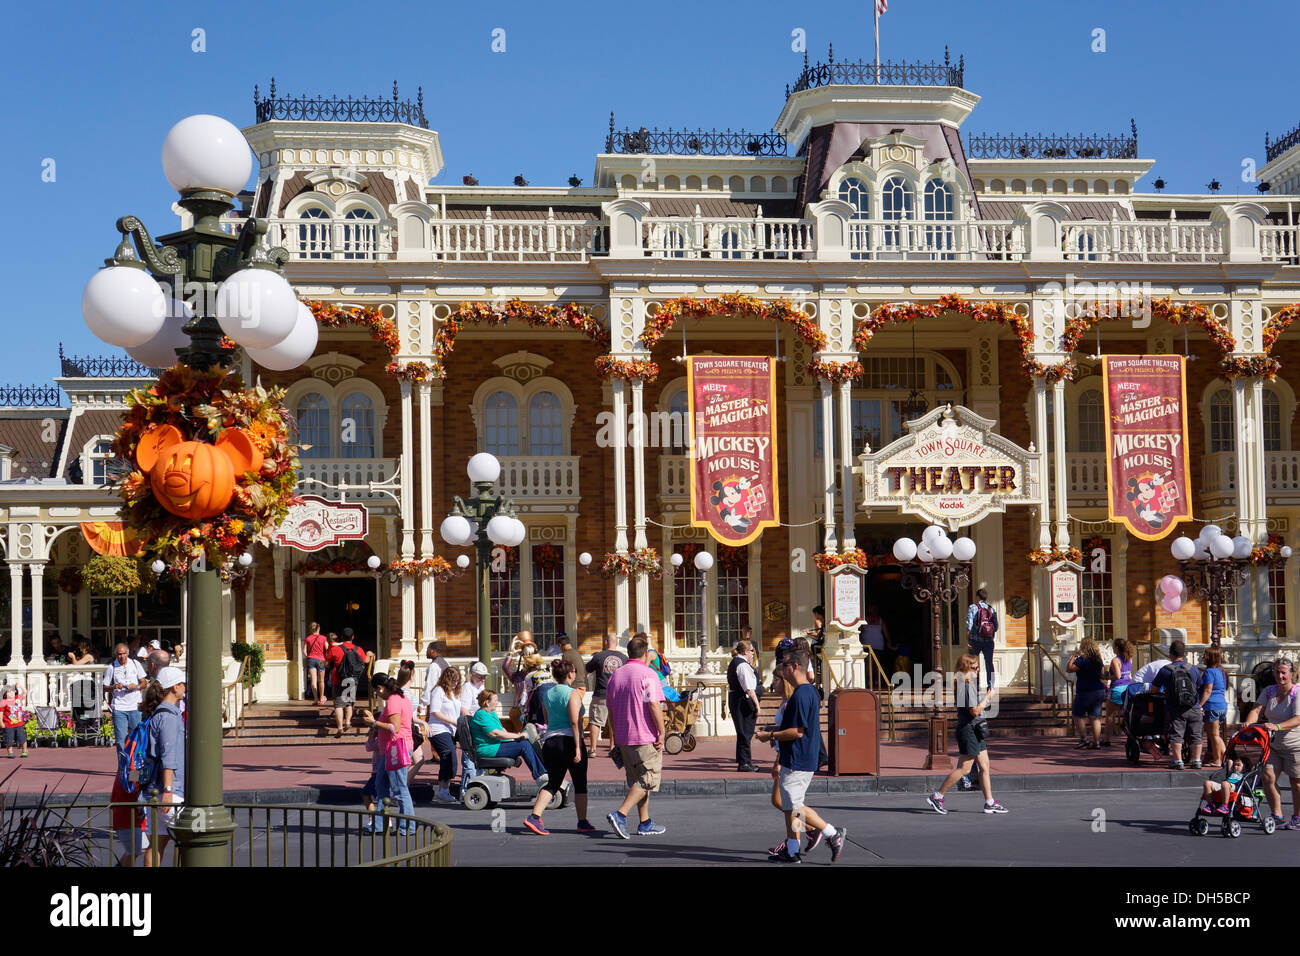 Town Square Theatre with Halloween Decorations, Disney World Resort, Orlando Florida Stock Photo